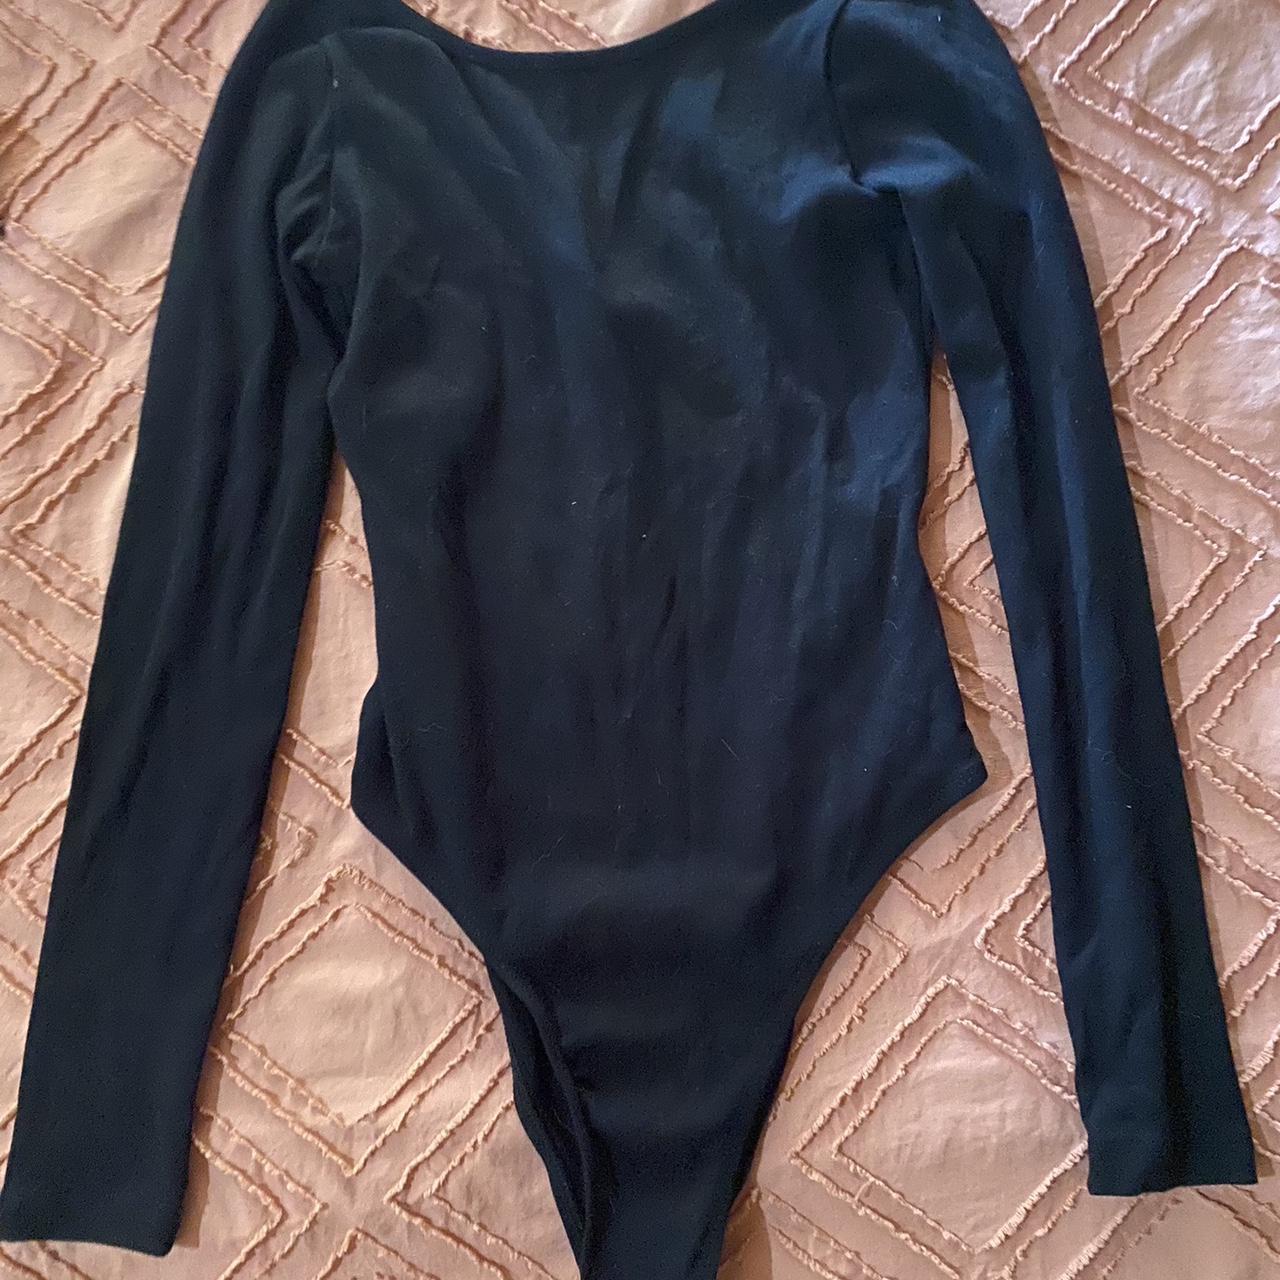 Kookai black body suit size 1 - Depop